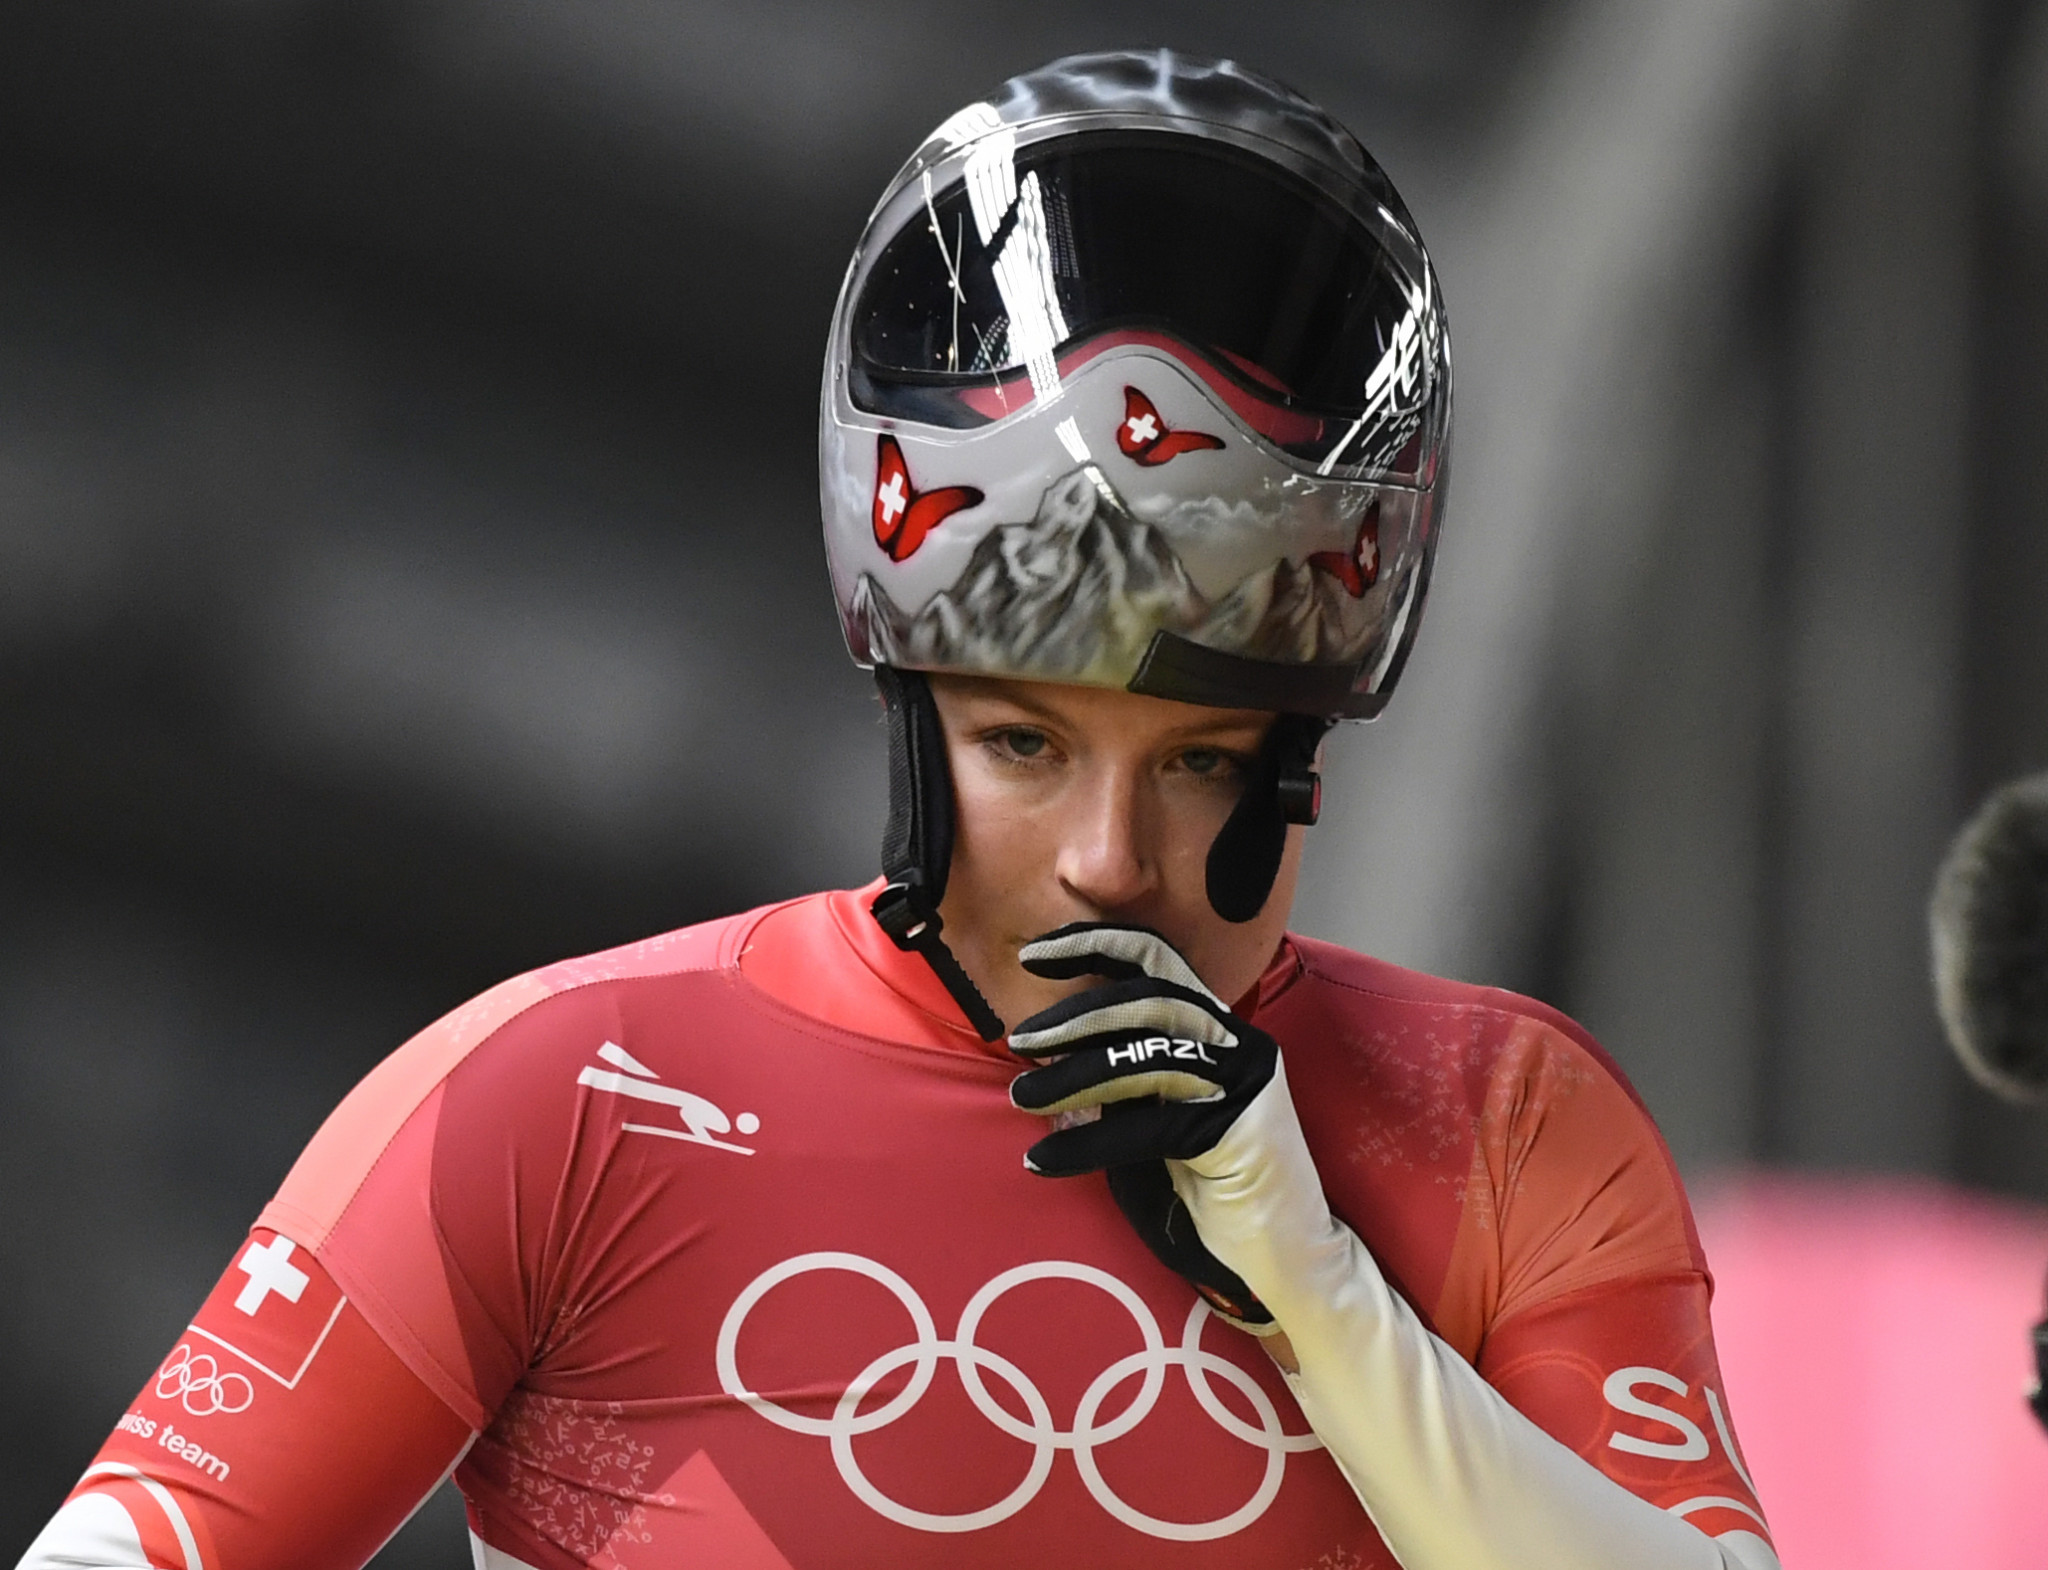 World Championship silver medallist Marina Gilardoni has announced her retirement from skeleton ©Getty Images